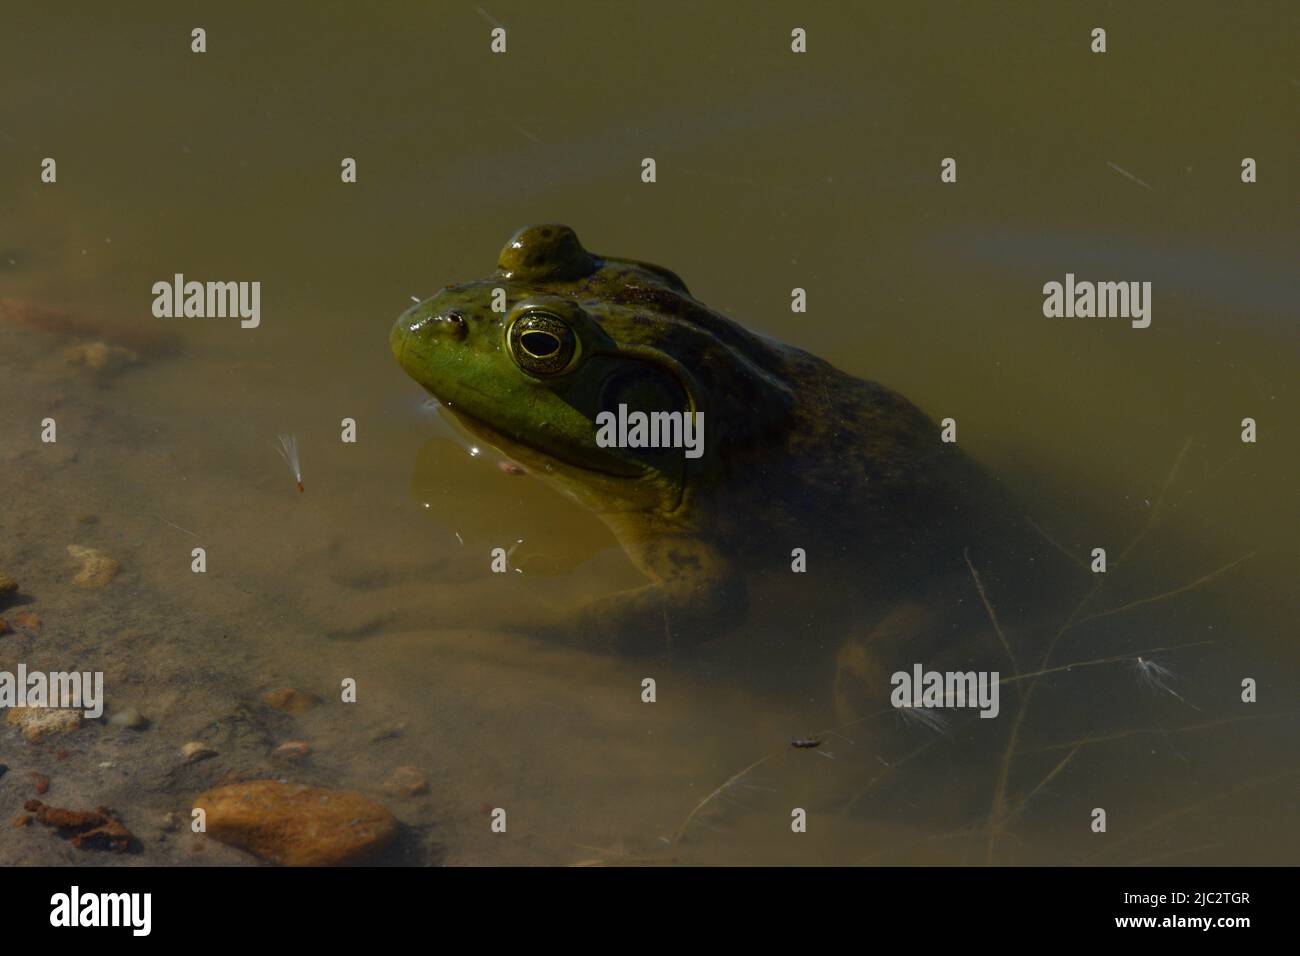 Bullfrog américain (Lithobates catesbeianus) du comté de Stafford, Kansas, États-Unis. Banque D'Images